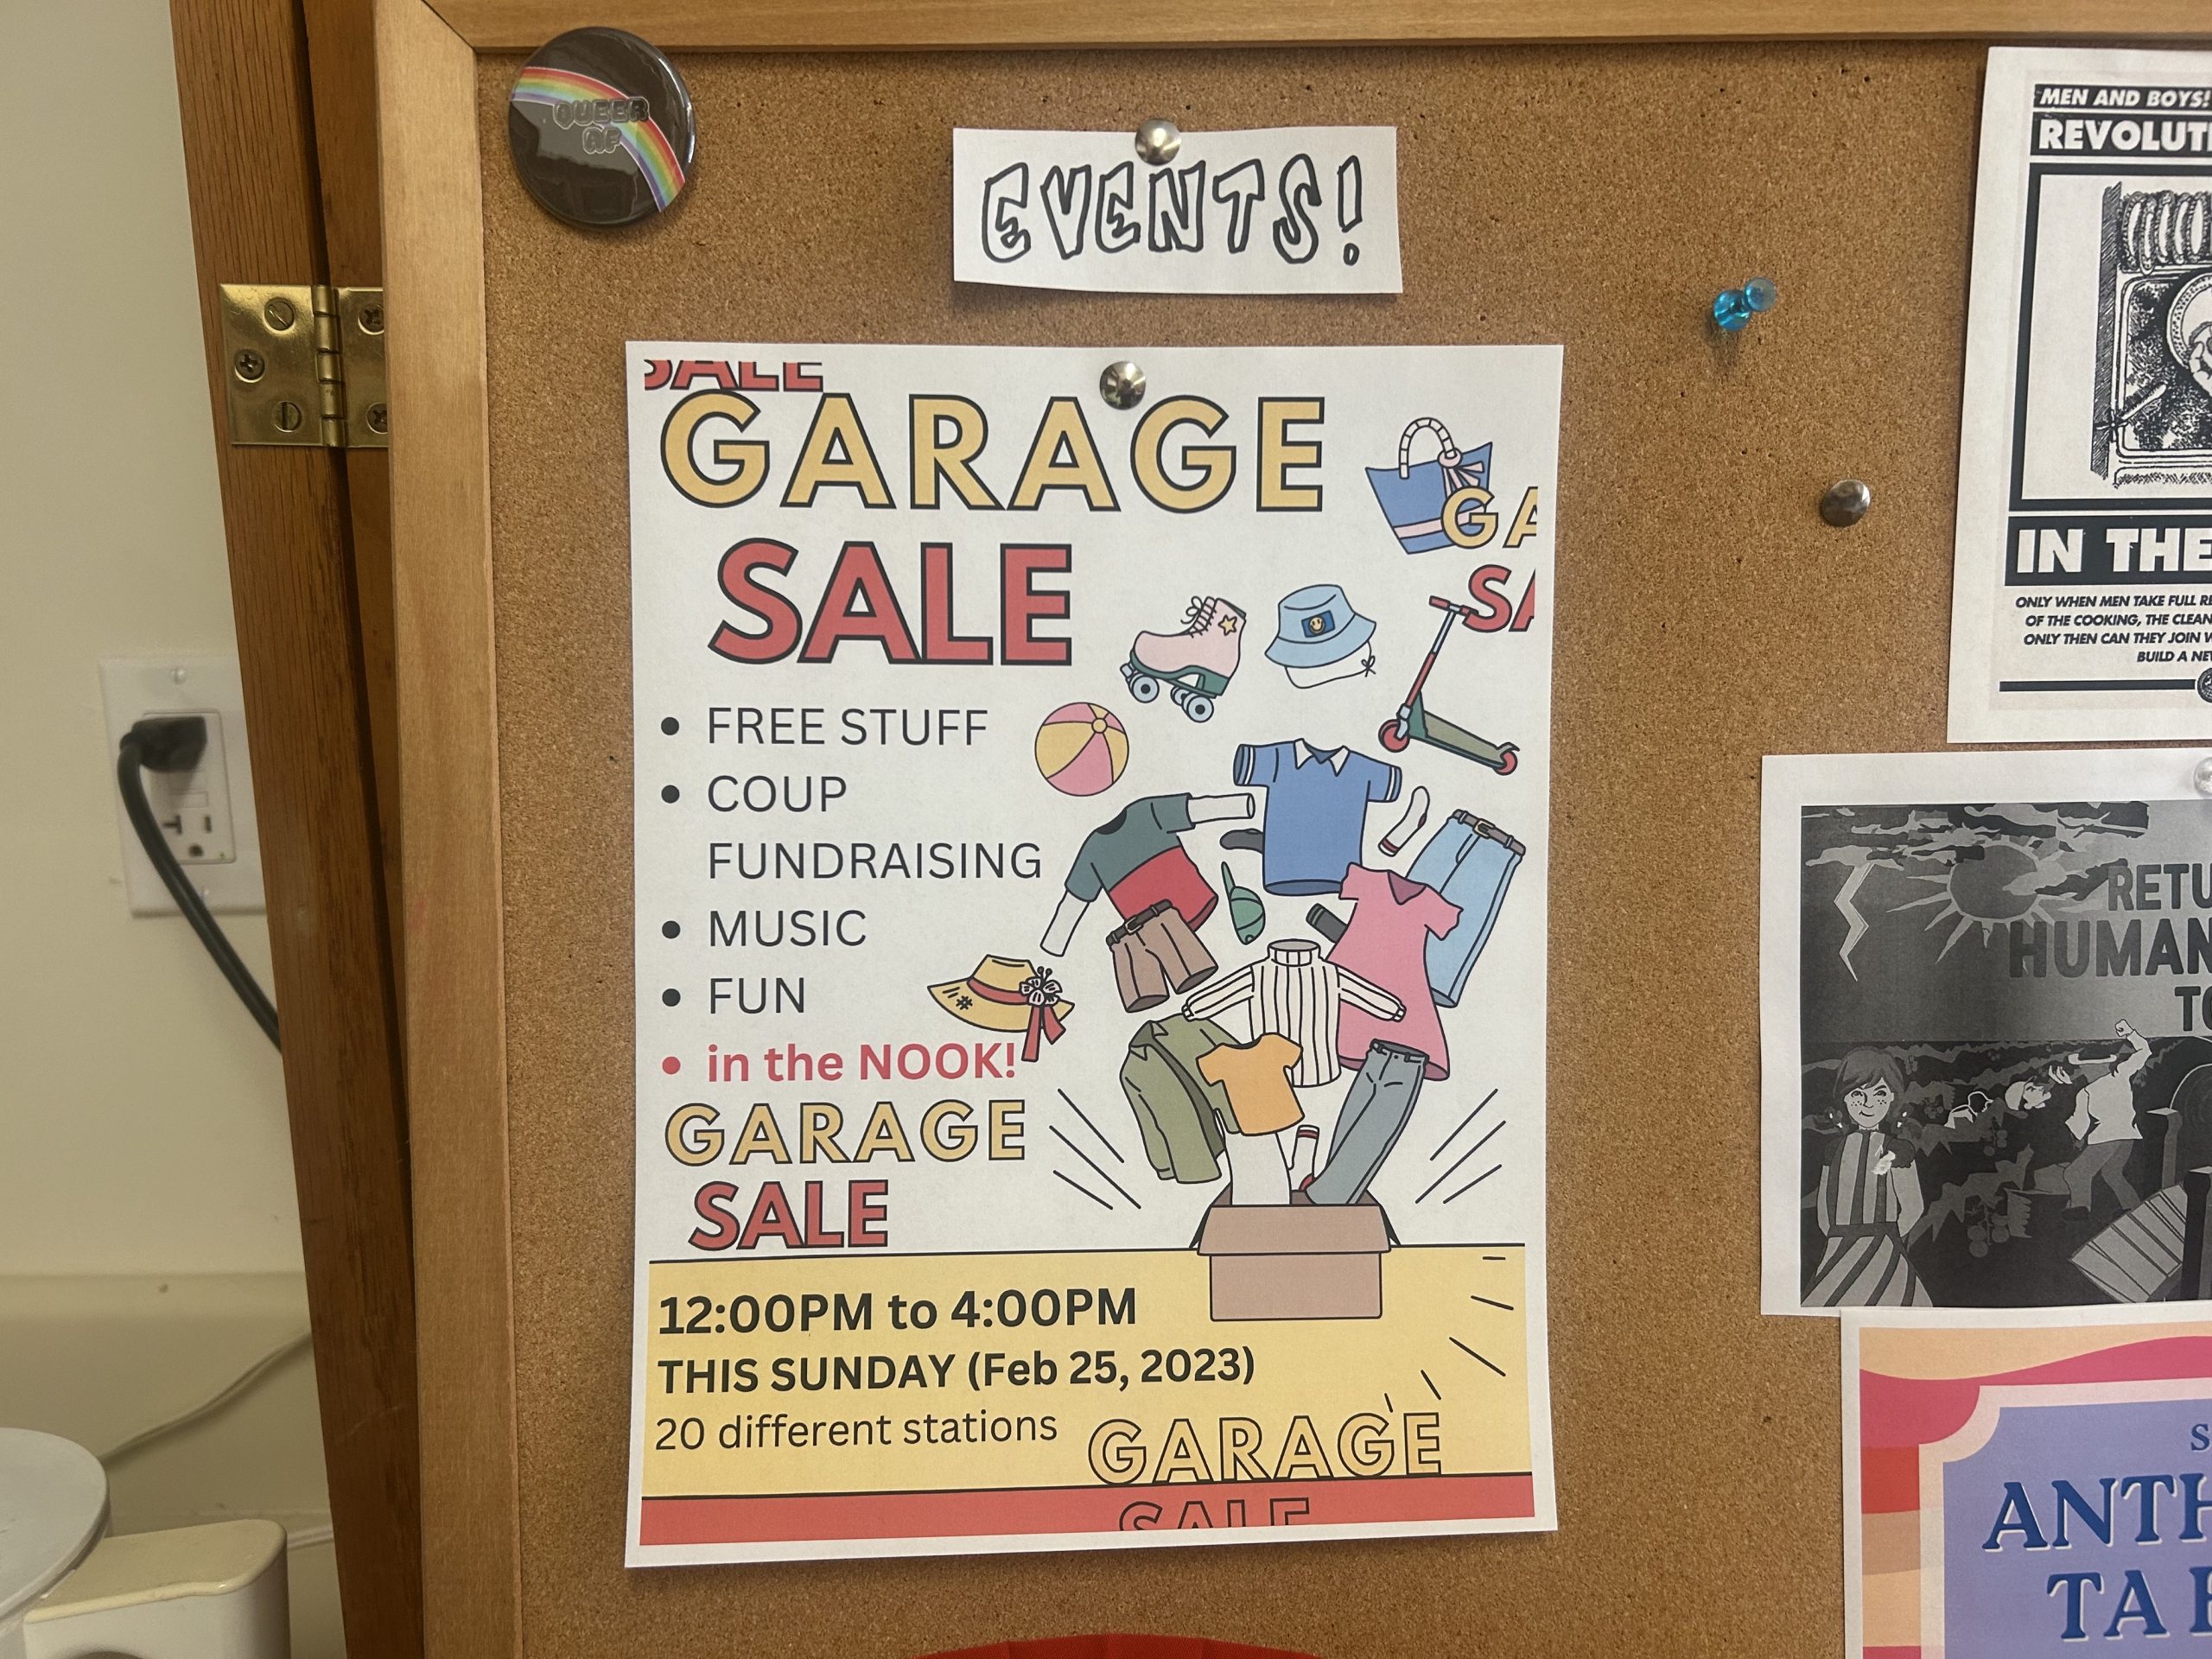 The New College Garage Sale